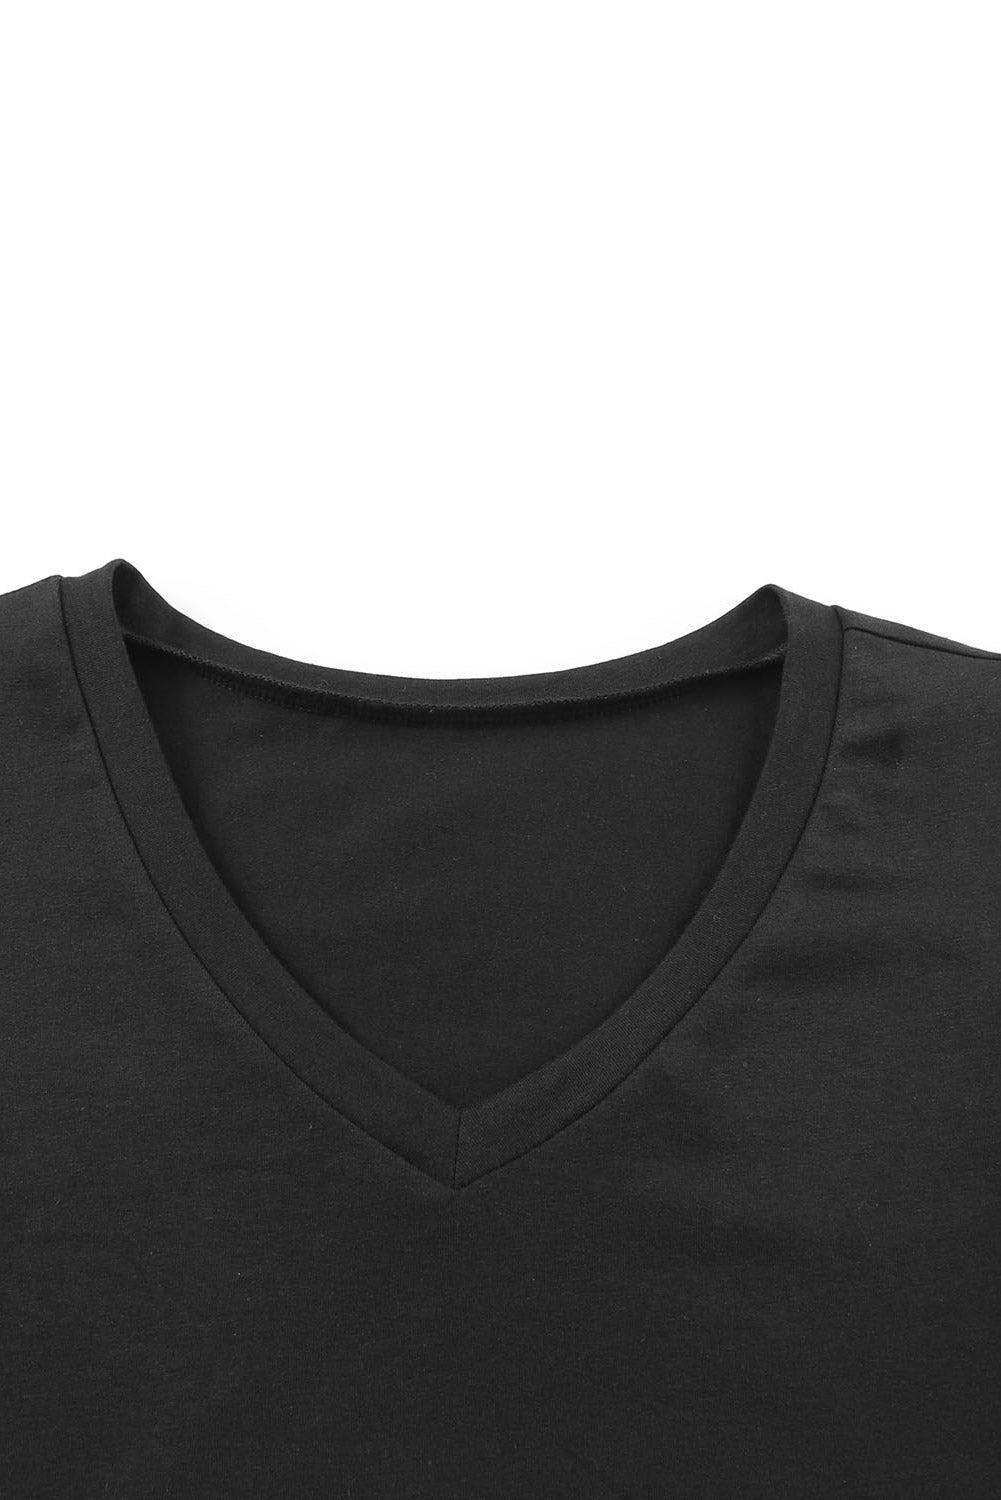 Black Puff Sleeve Casual V Neck T-Shirt